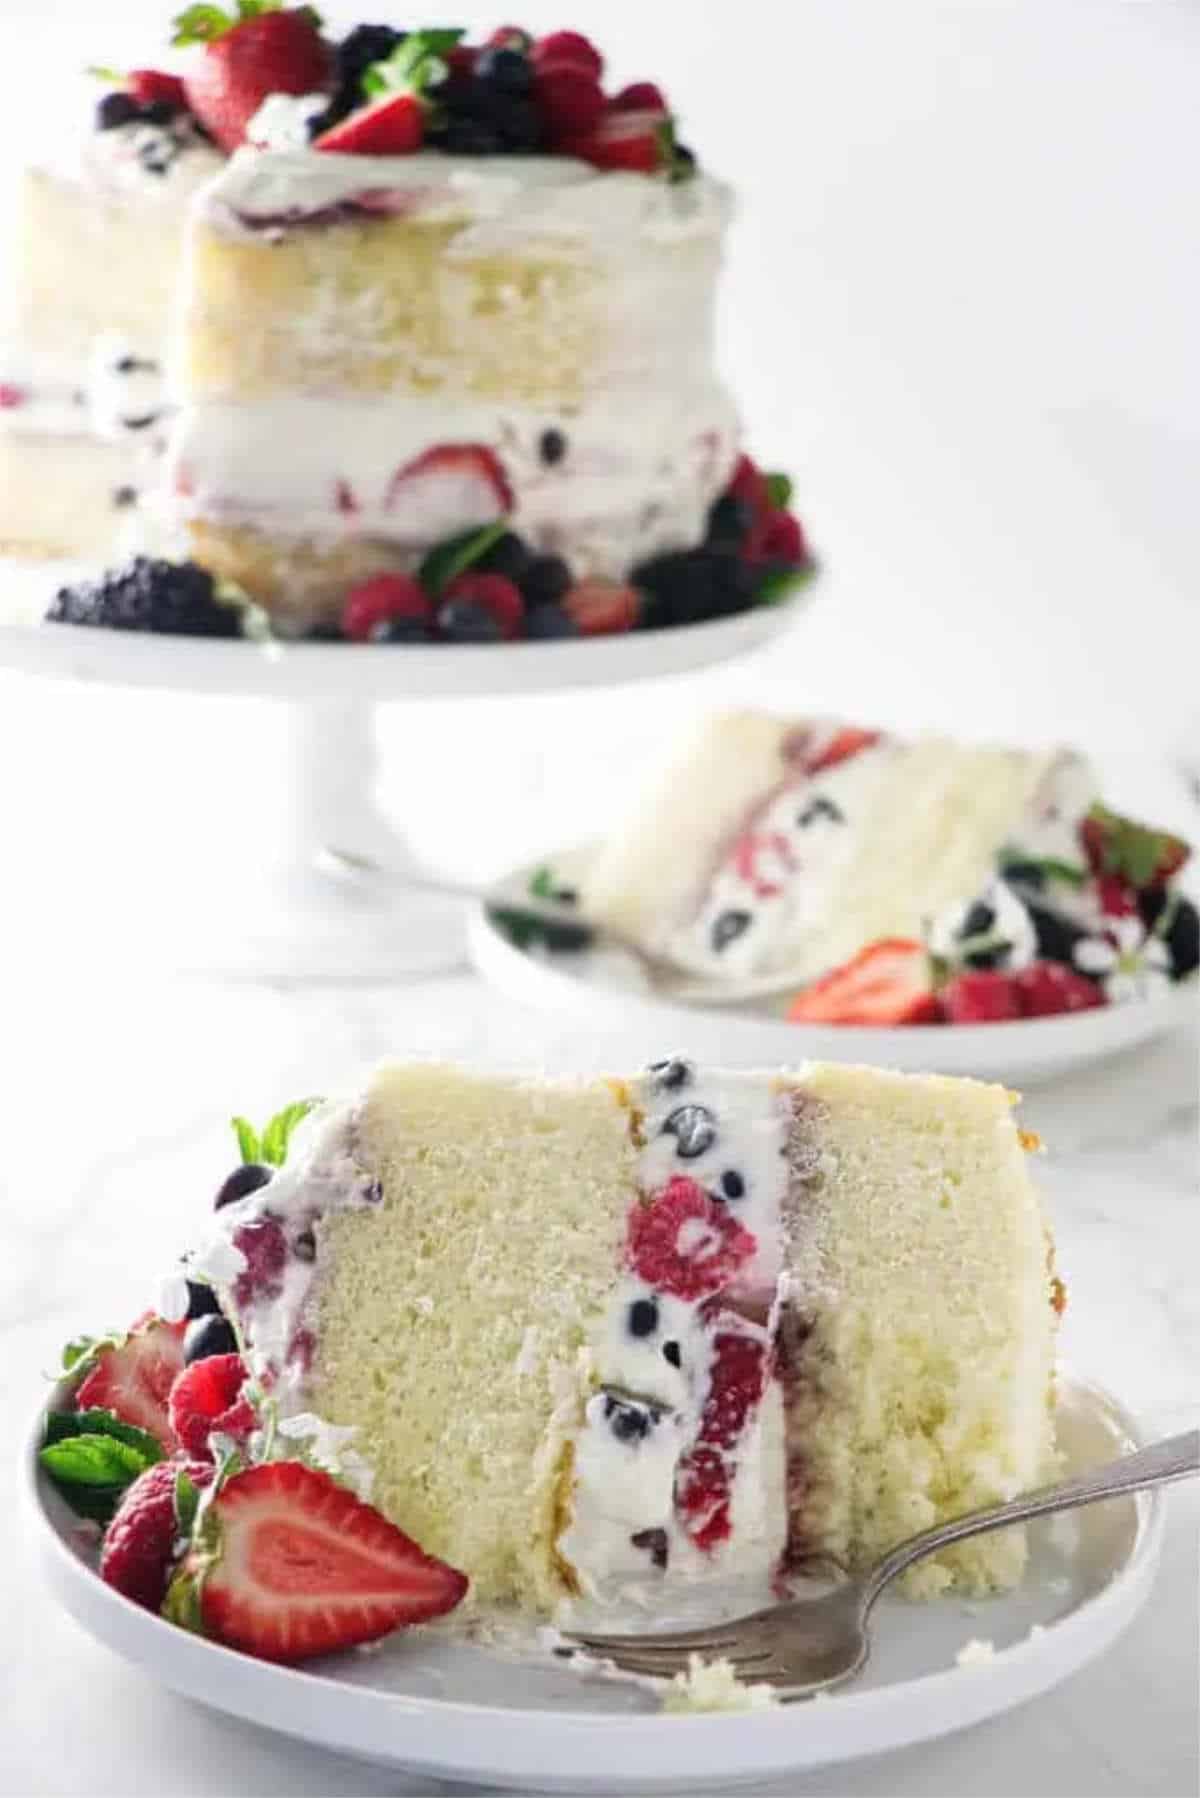 Hot milk sponge cake with berries.